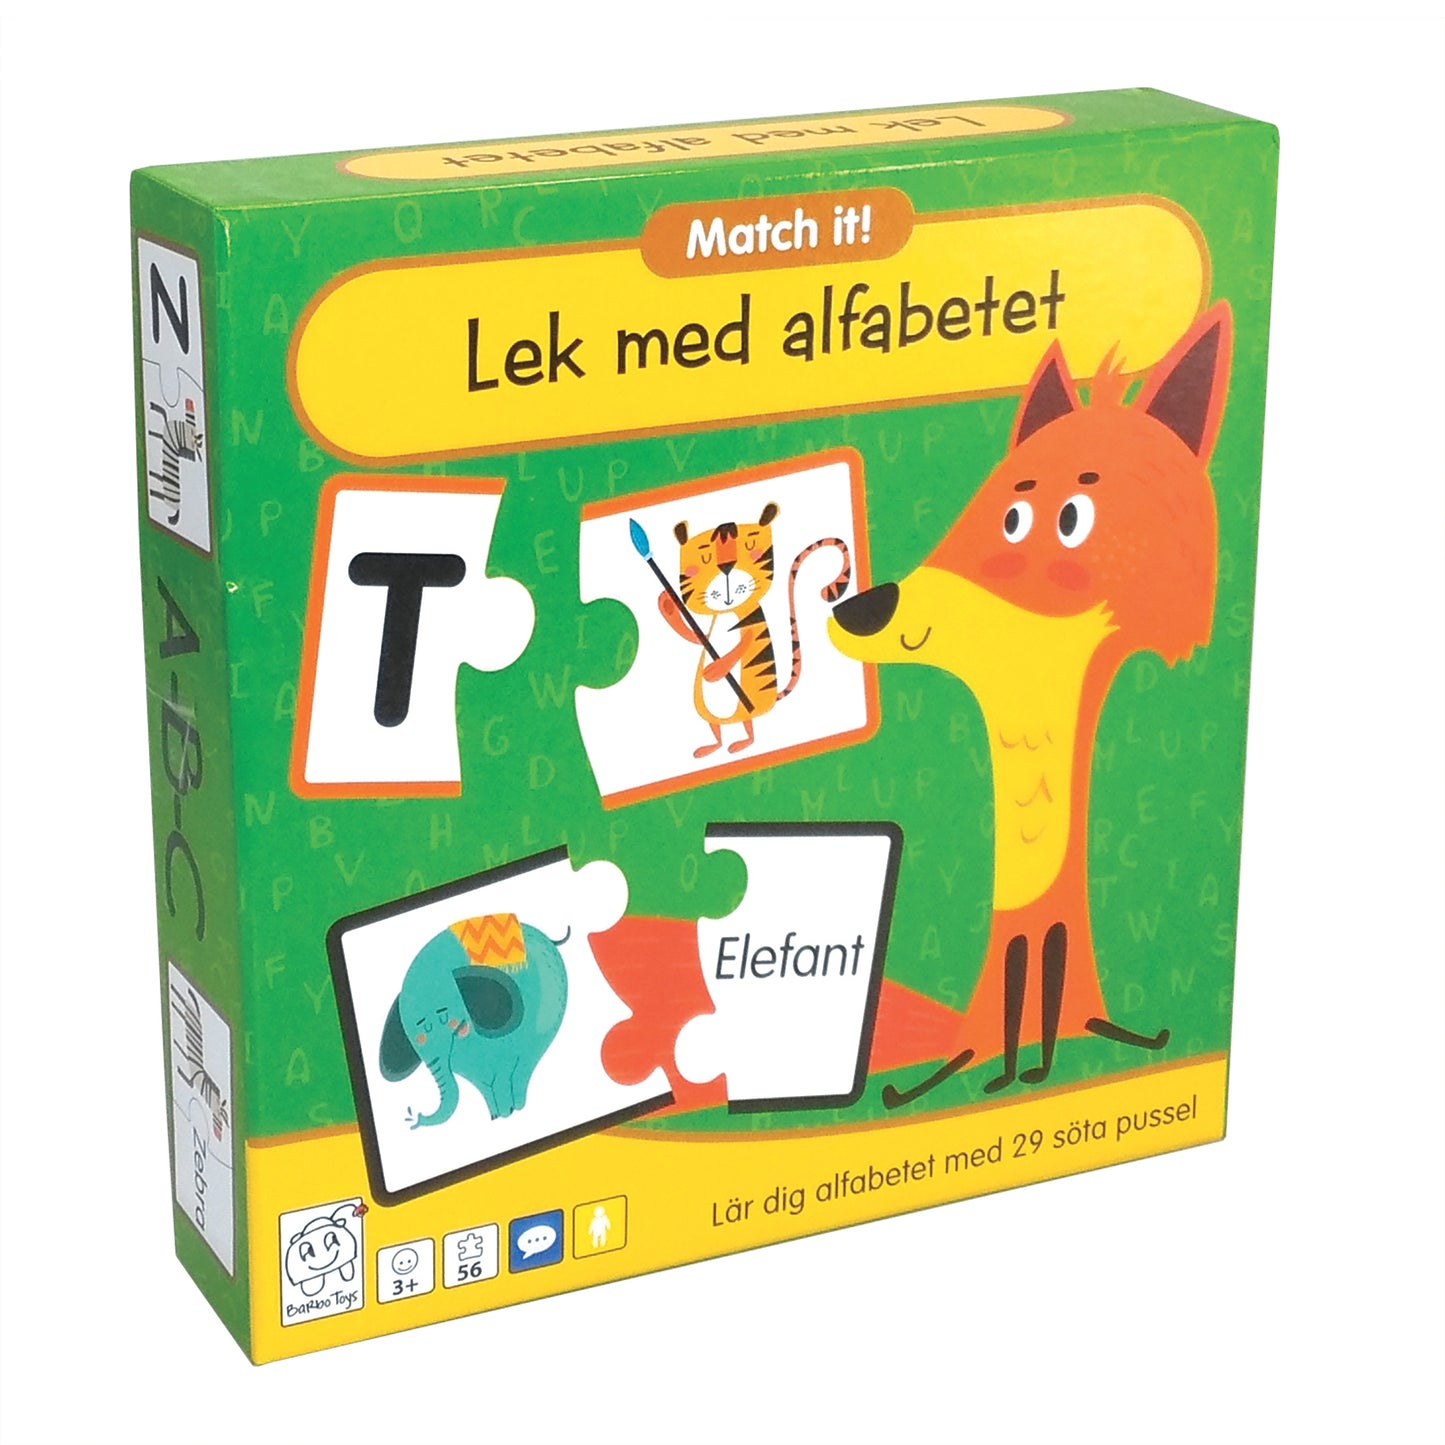 Leg med Alfabet - SWEDISH version